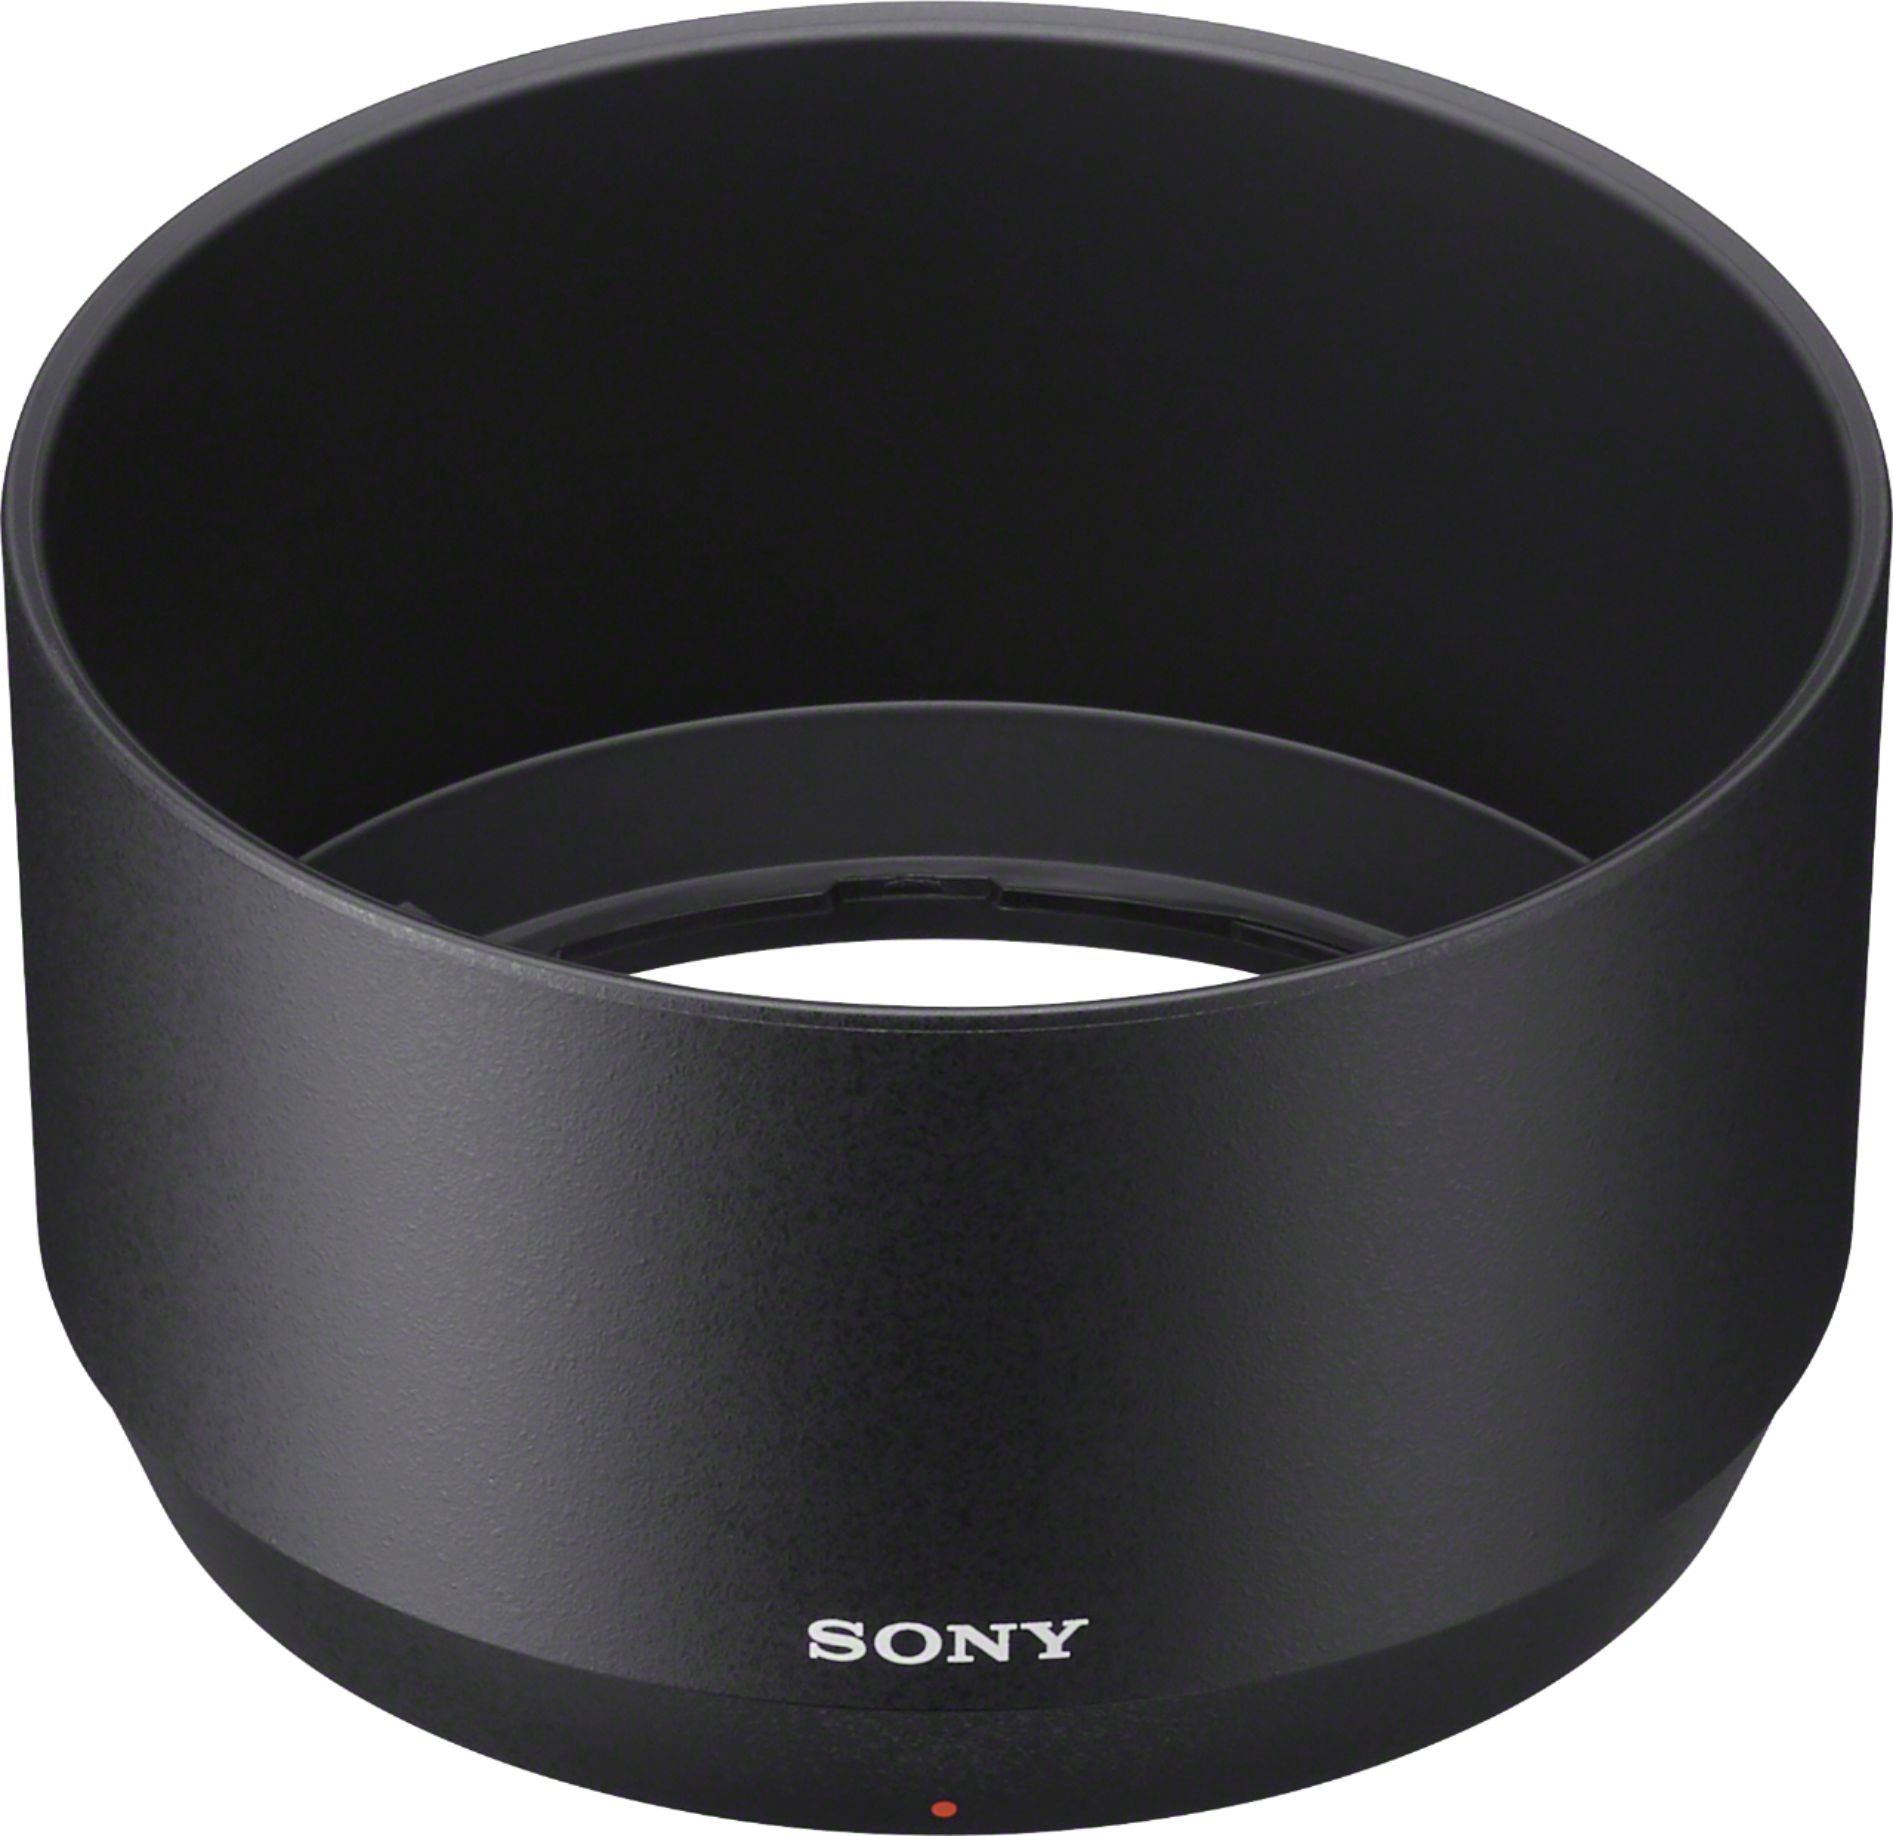 Sony E 70-350mm F4.5-6.3 G OSS Telephoto Zoom Lens for E-mount Cameras